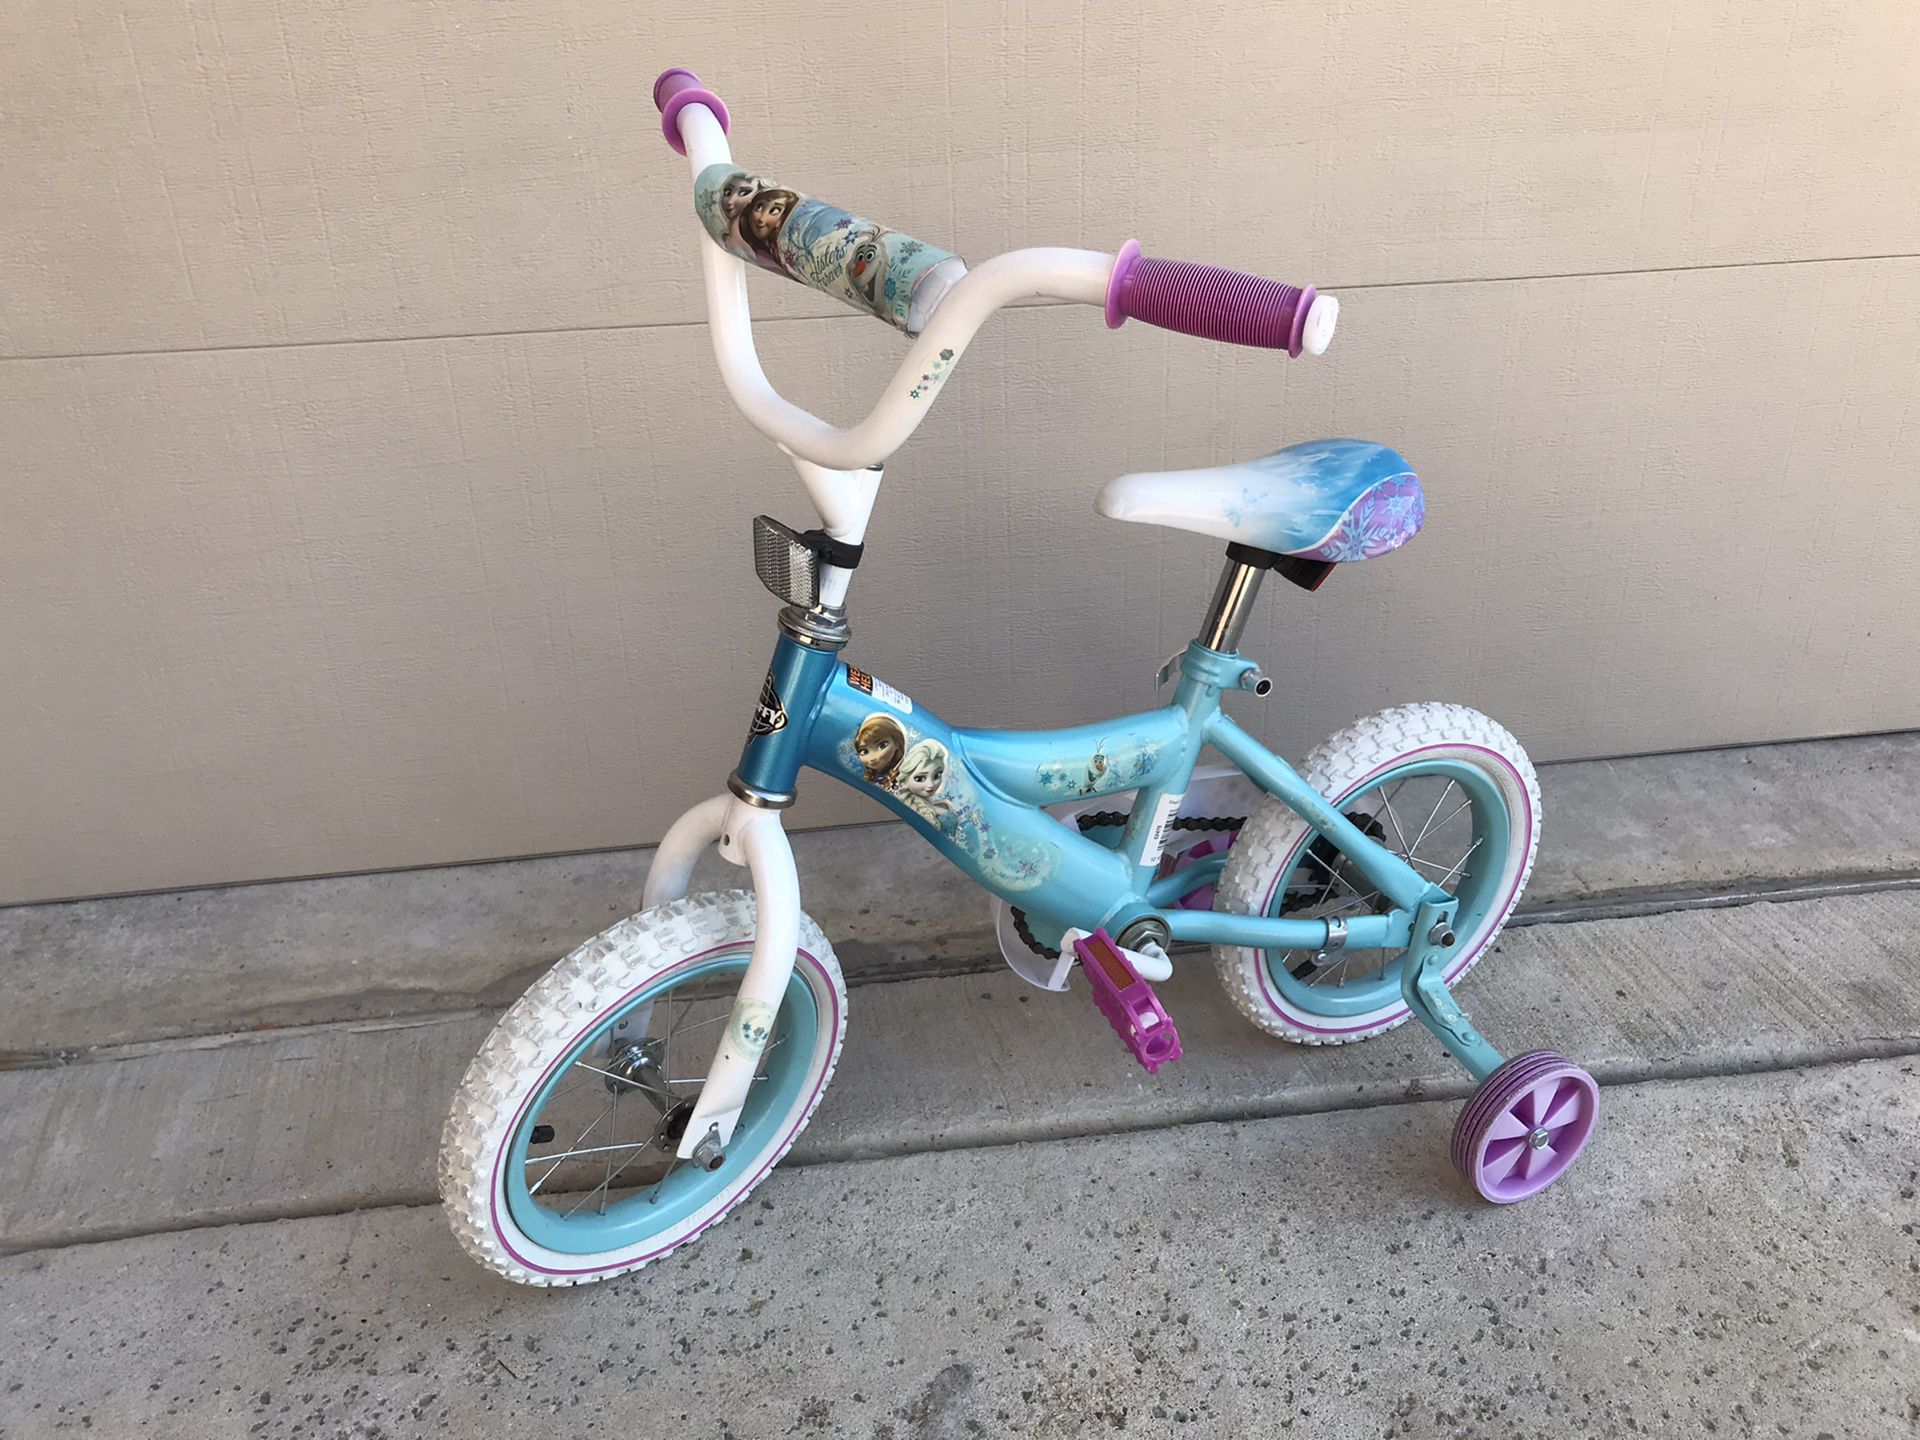 Frozen Huffy Girl’s Bike 12" with trainer wheels